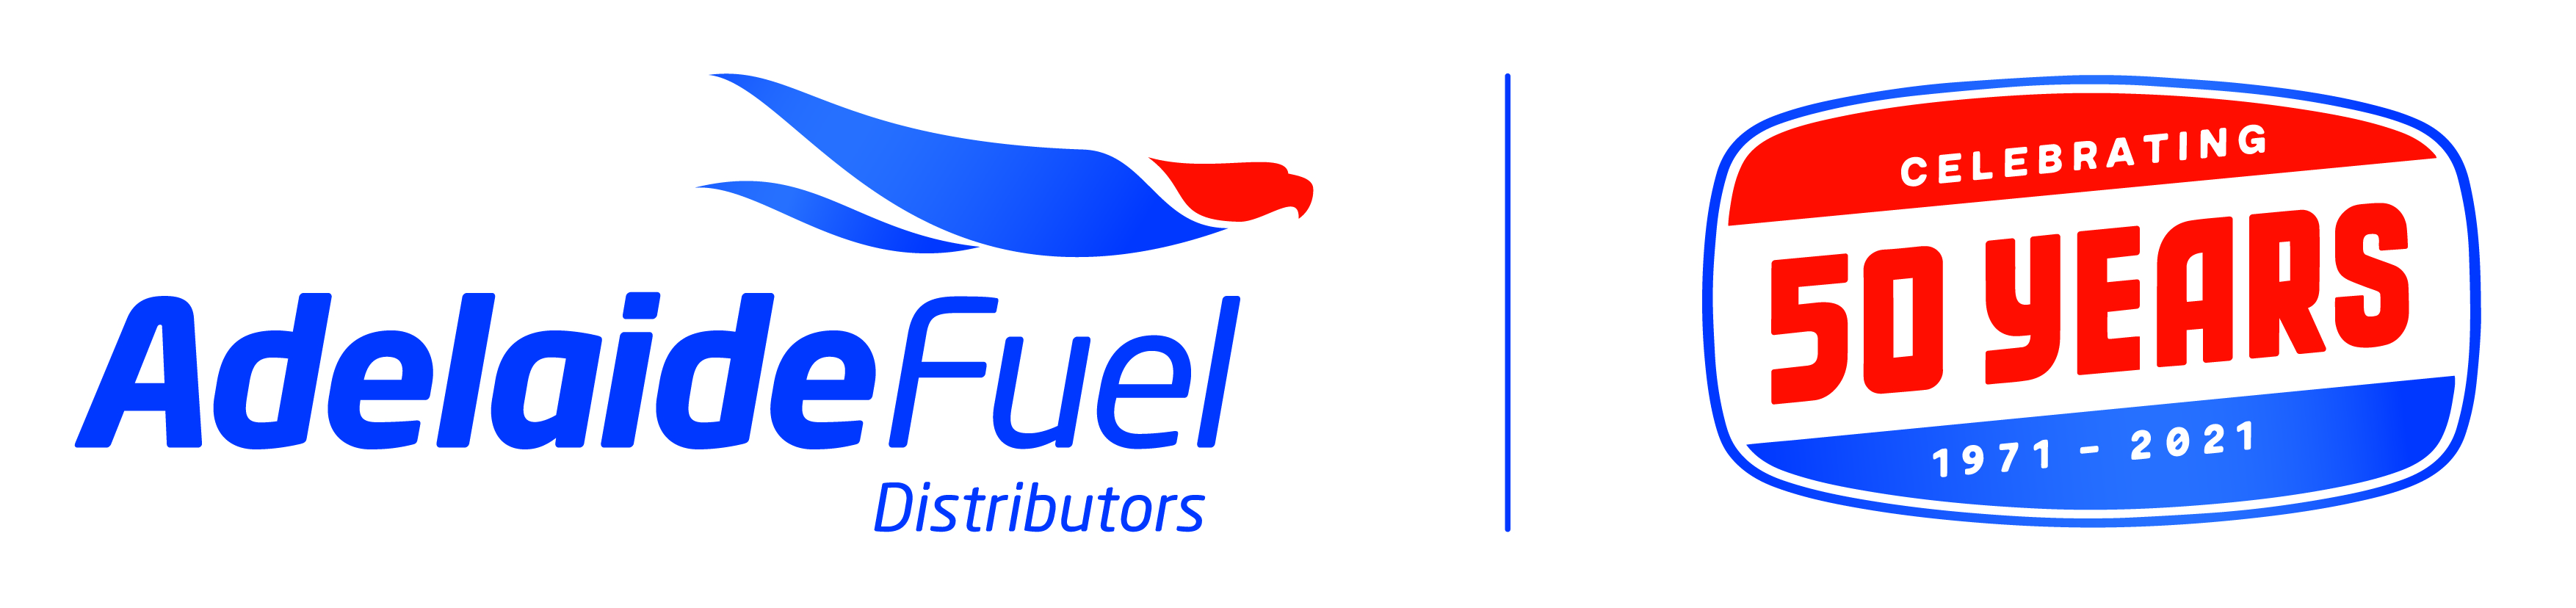 Adelaide Fuel Distributors